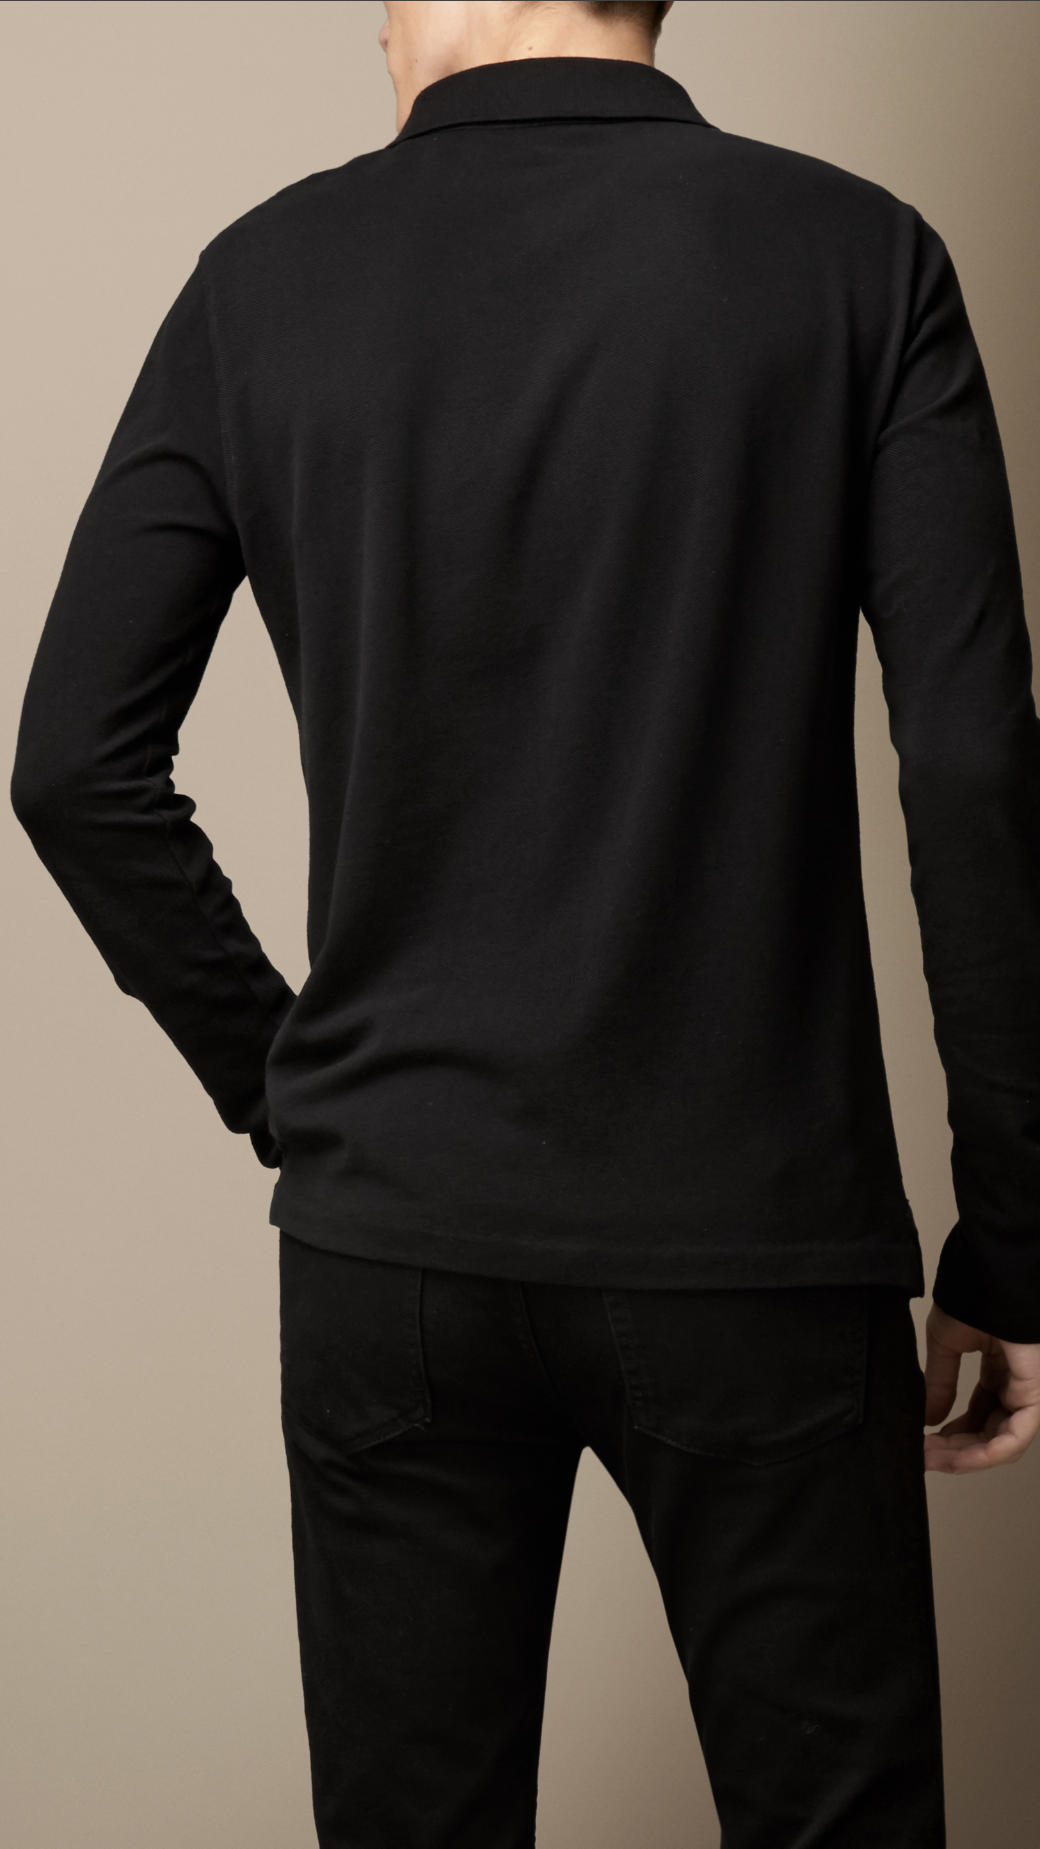 Burberry Long Sleeve Polo Shirt in Black for Men - Lyst